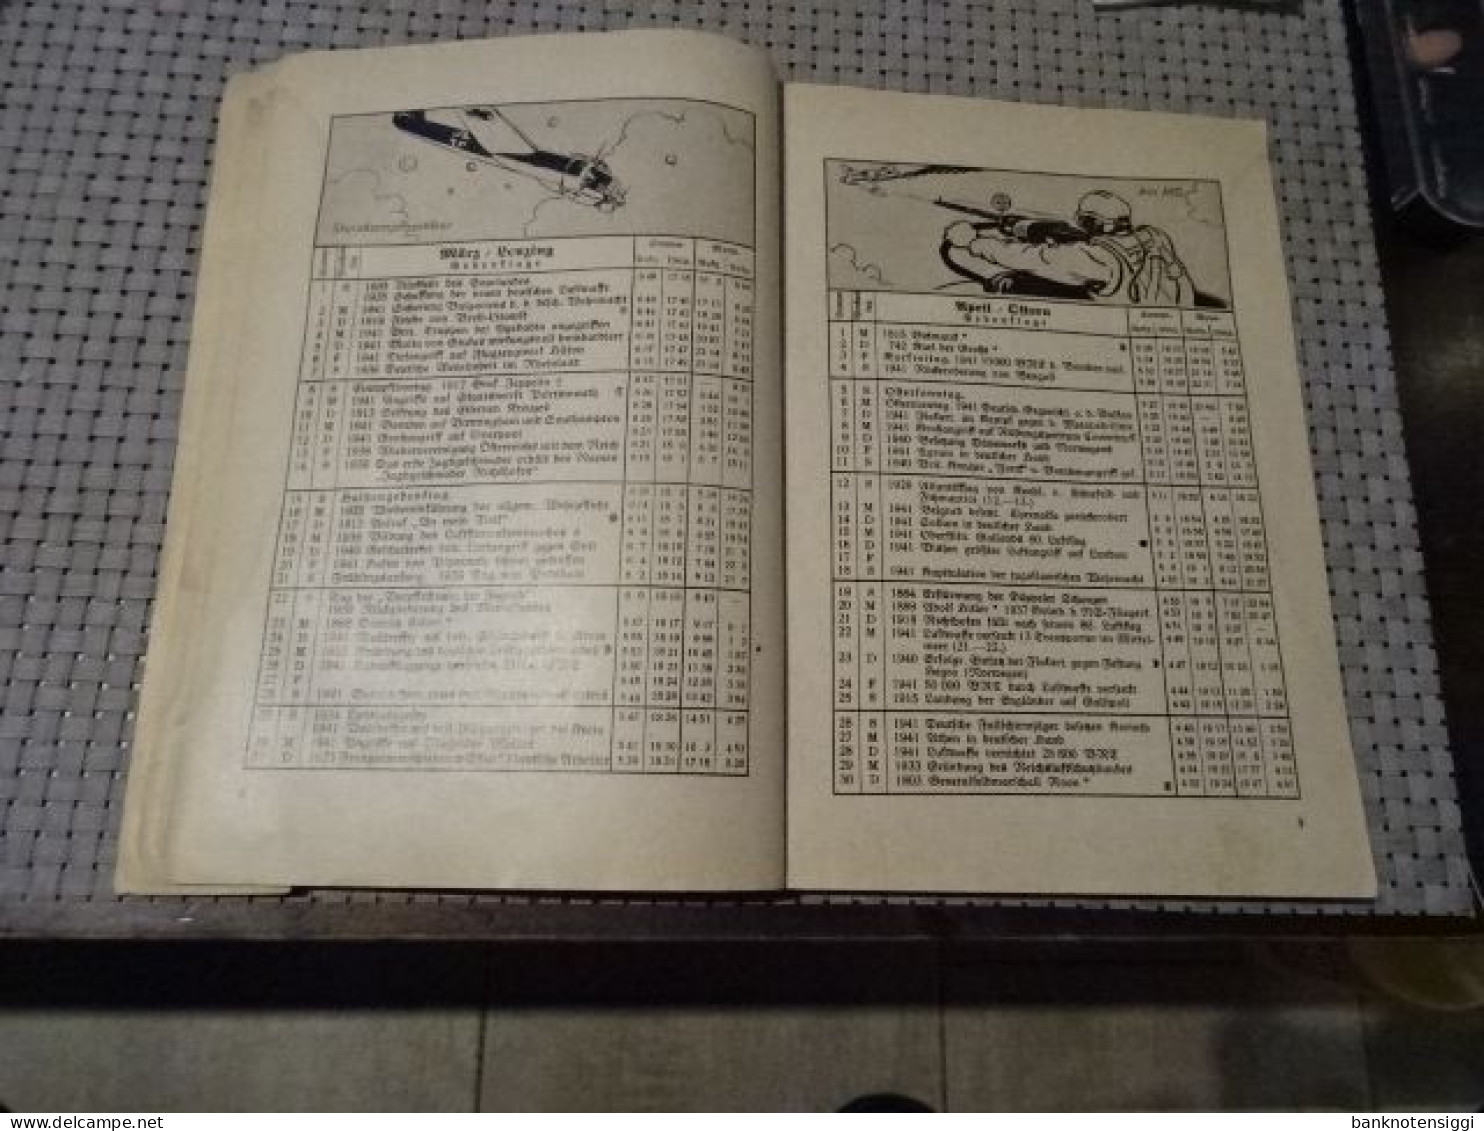 1 Buch  "Adler- Jahrbuch 1942" - Aviation